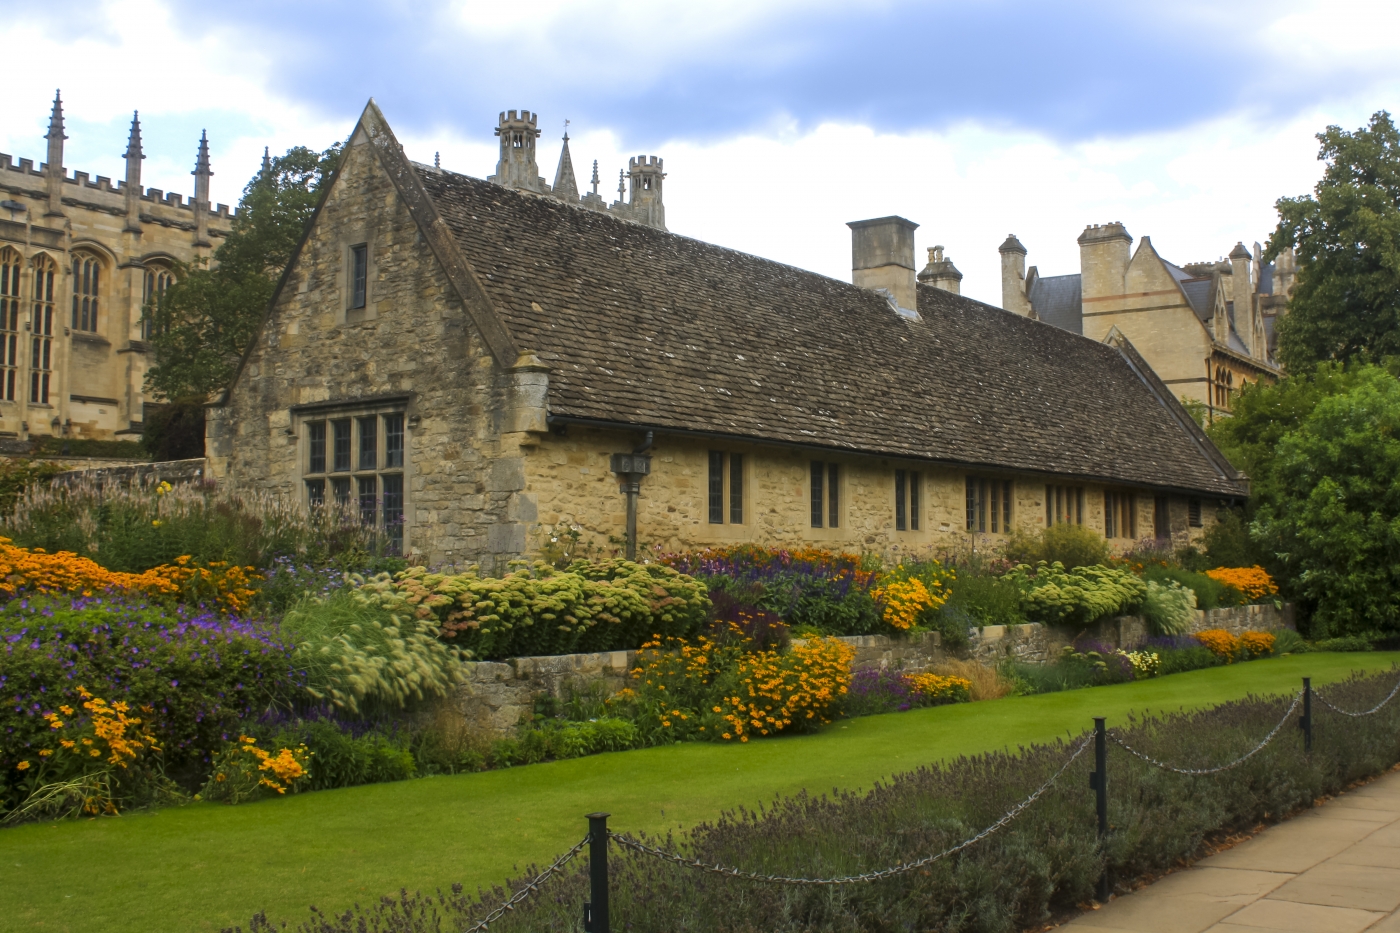 Oxford, England in Bloom by Pamela Carter